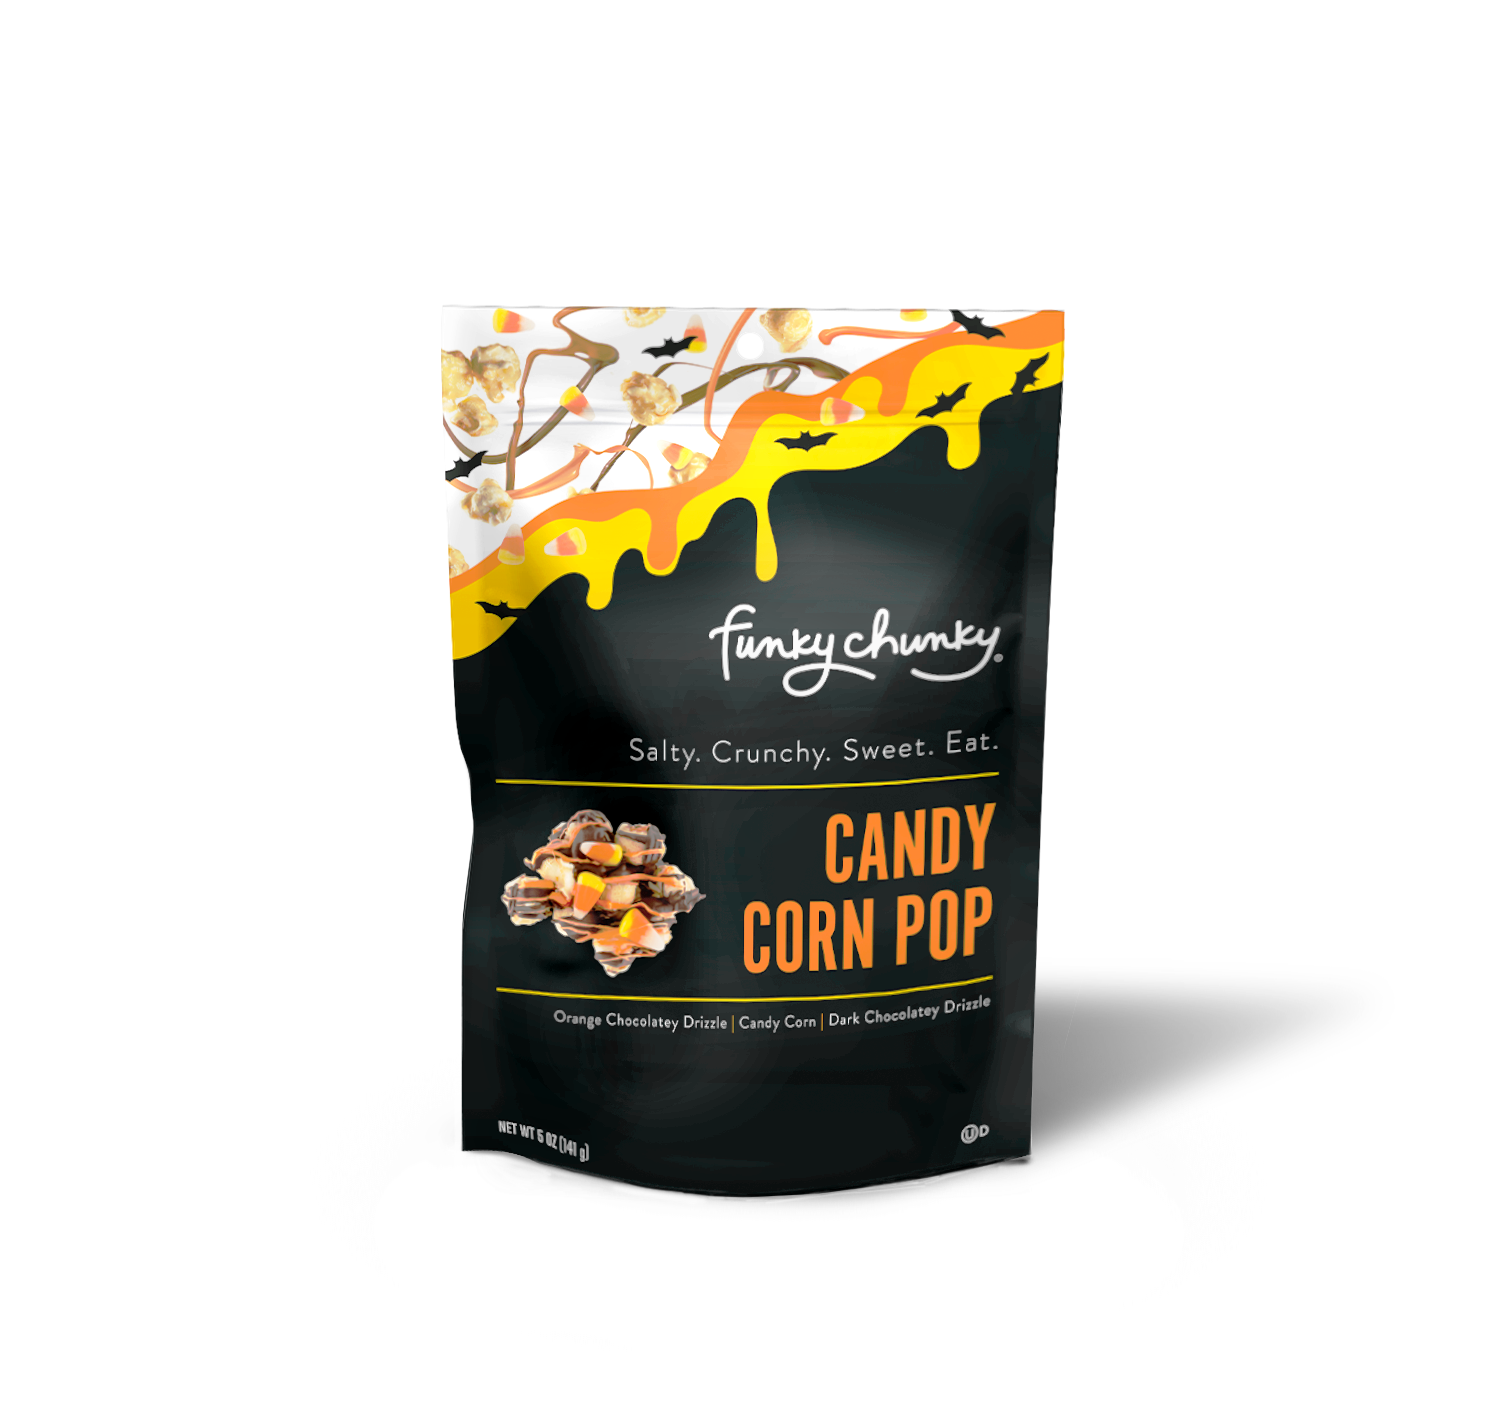 NEW Candy Corn Pop (5 oz - 6 pack)